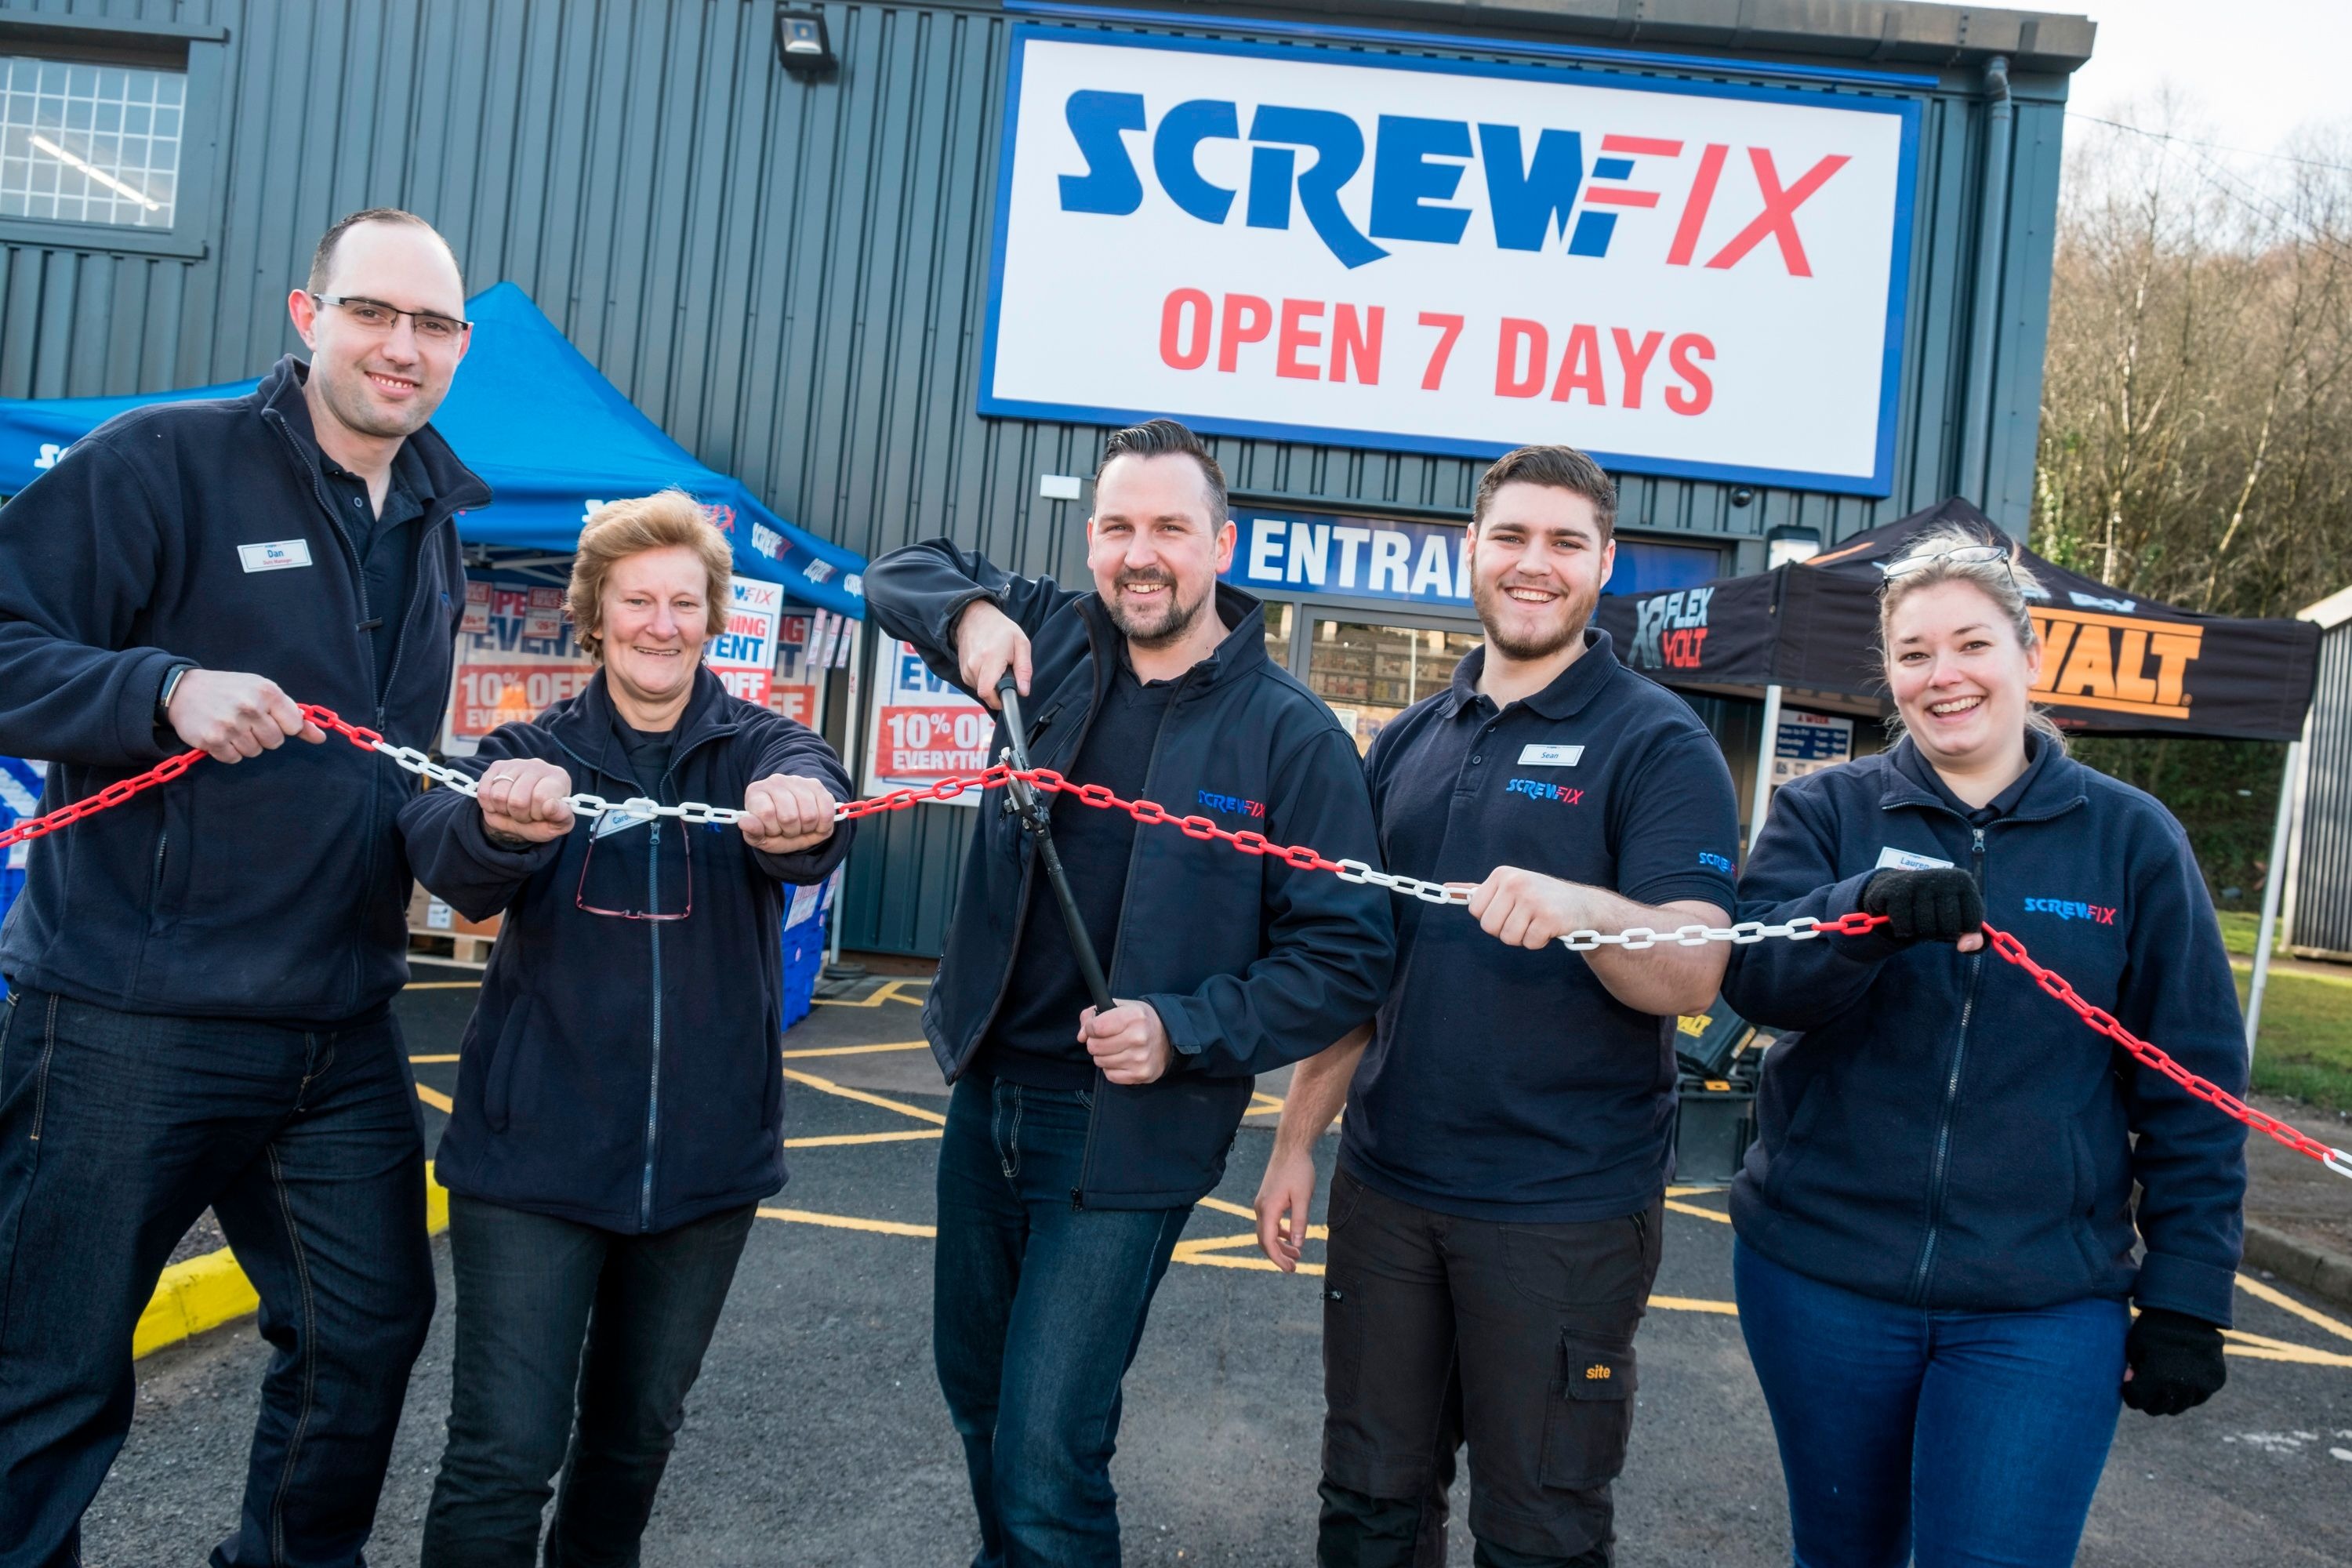 Pontypool celebrates new Screwfix store opening